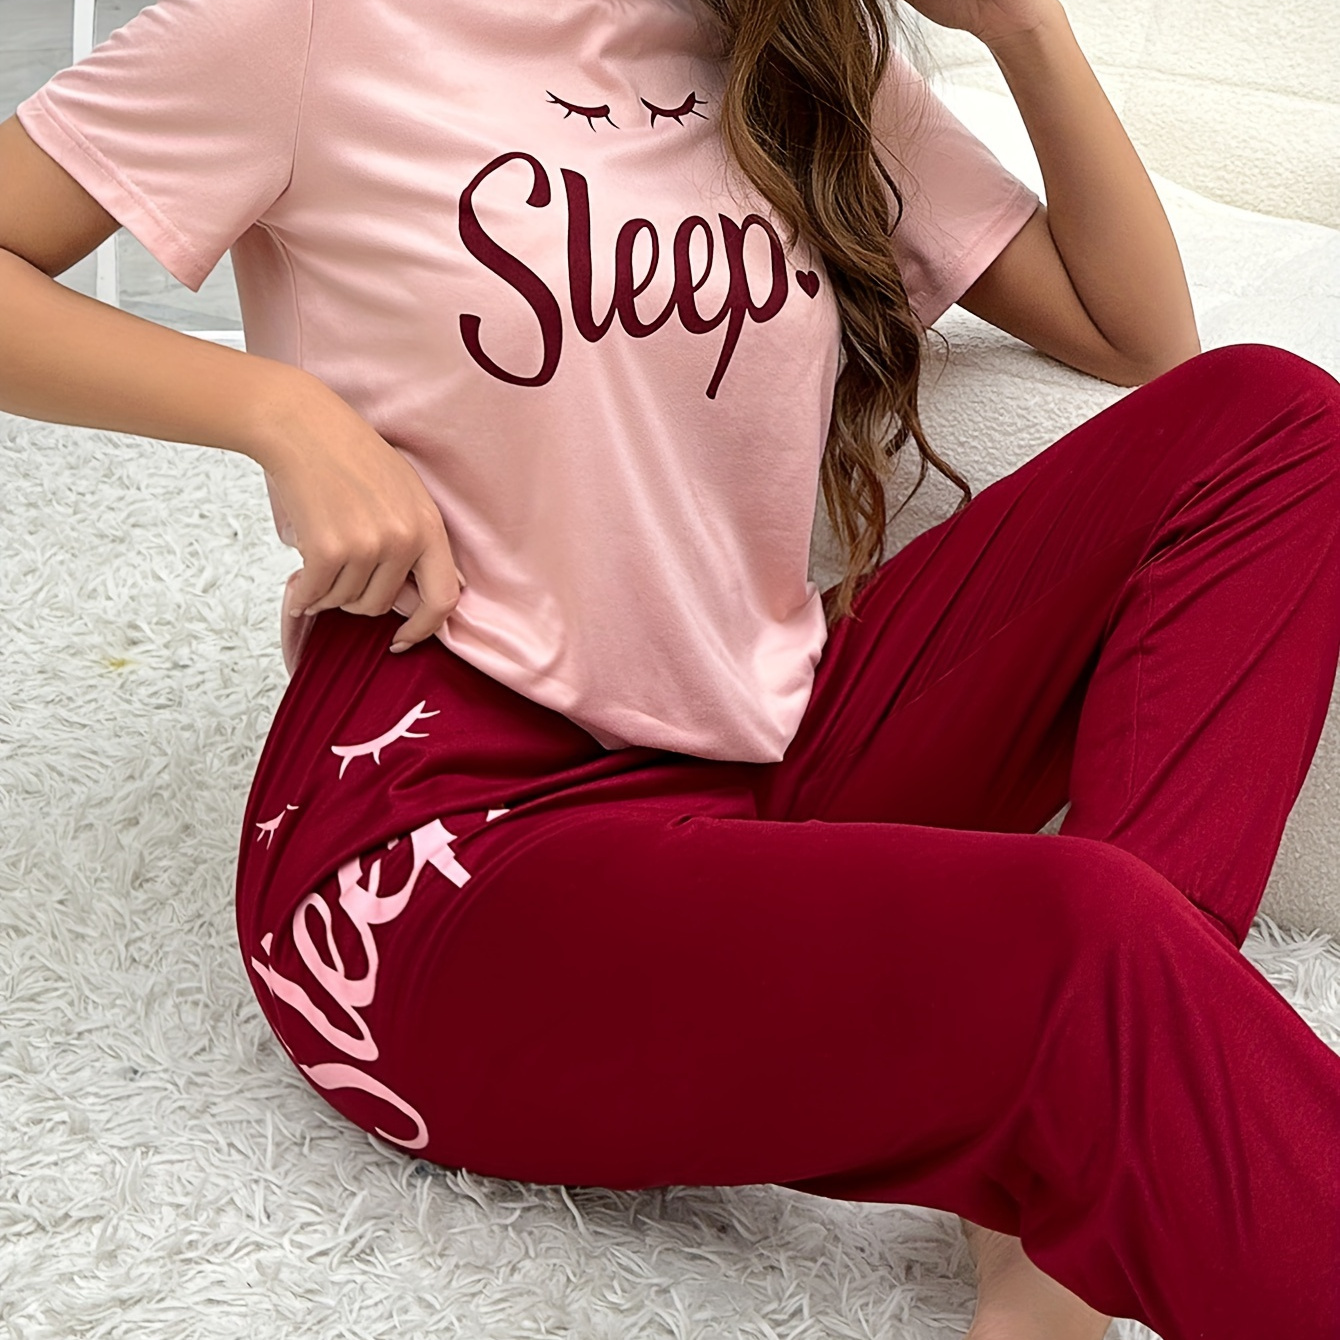 

Eyelash & Letter Print Pajama Set, Casual Short Sleeve Round Neck Top & Elastic Joggers, Women's Sleepwear